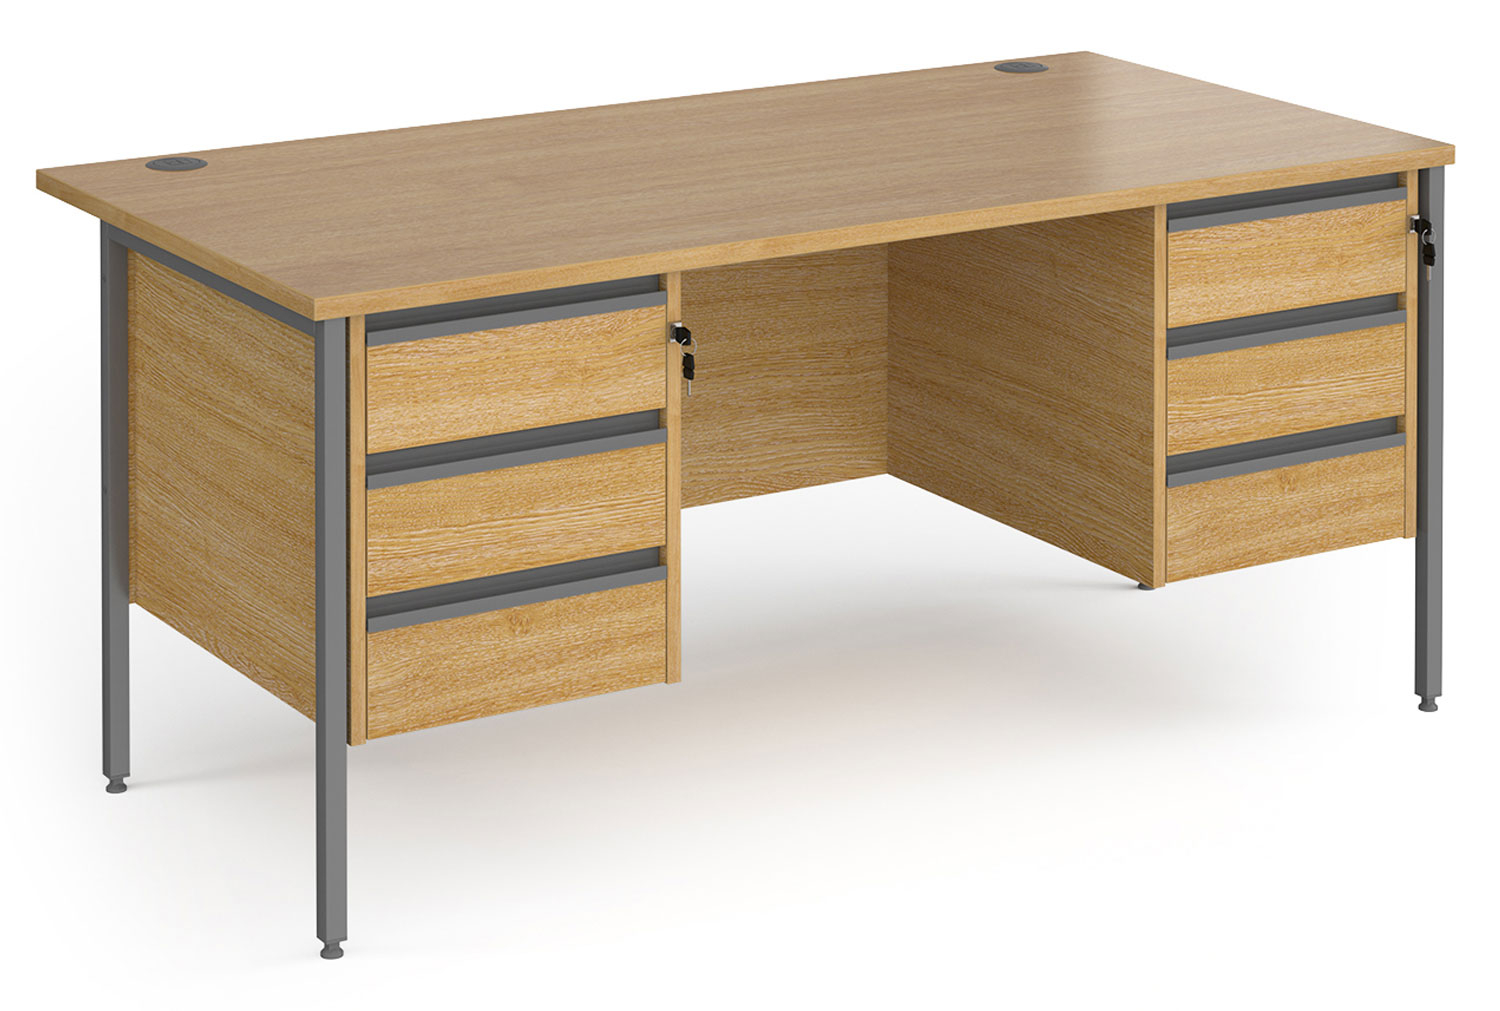 Value Line Classic+ Rectangular H-Leg Office Desk 3+3 Drawers (Graphite Leg), 160wx80dx73h (cm), Oak